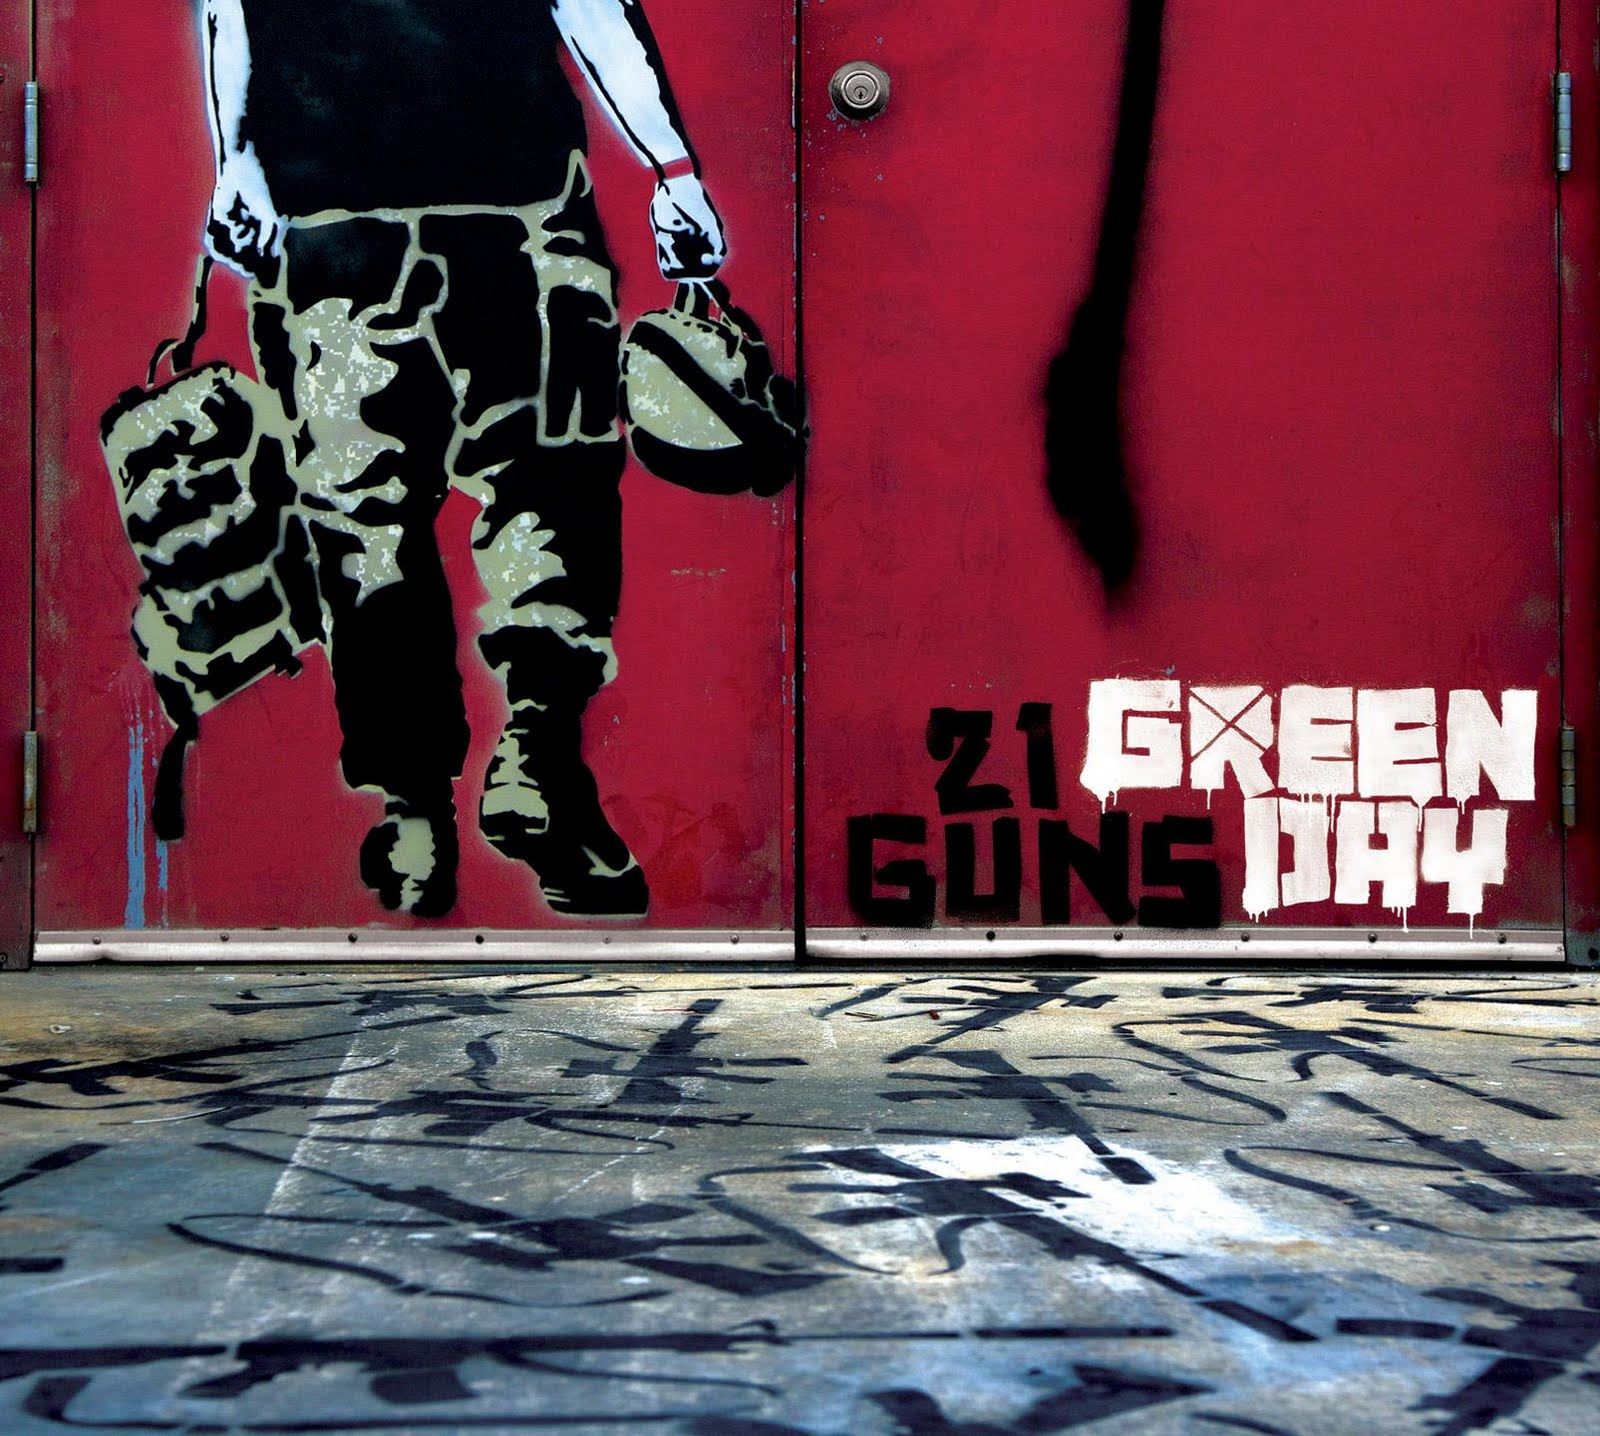 21 Guns Chords Greenday 21 Guns Guitar Chords Tabs Lyrics Song Facts Meaning